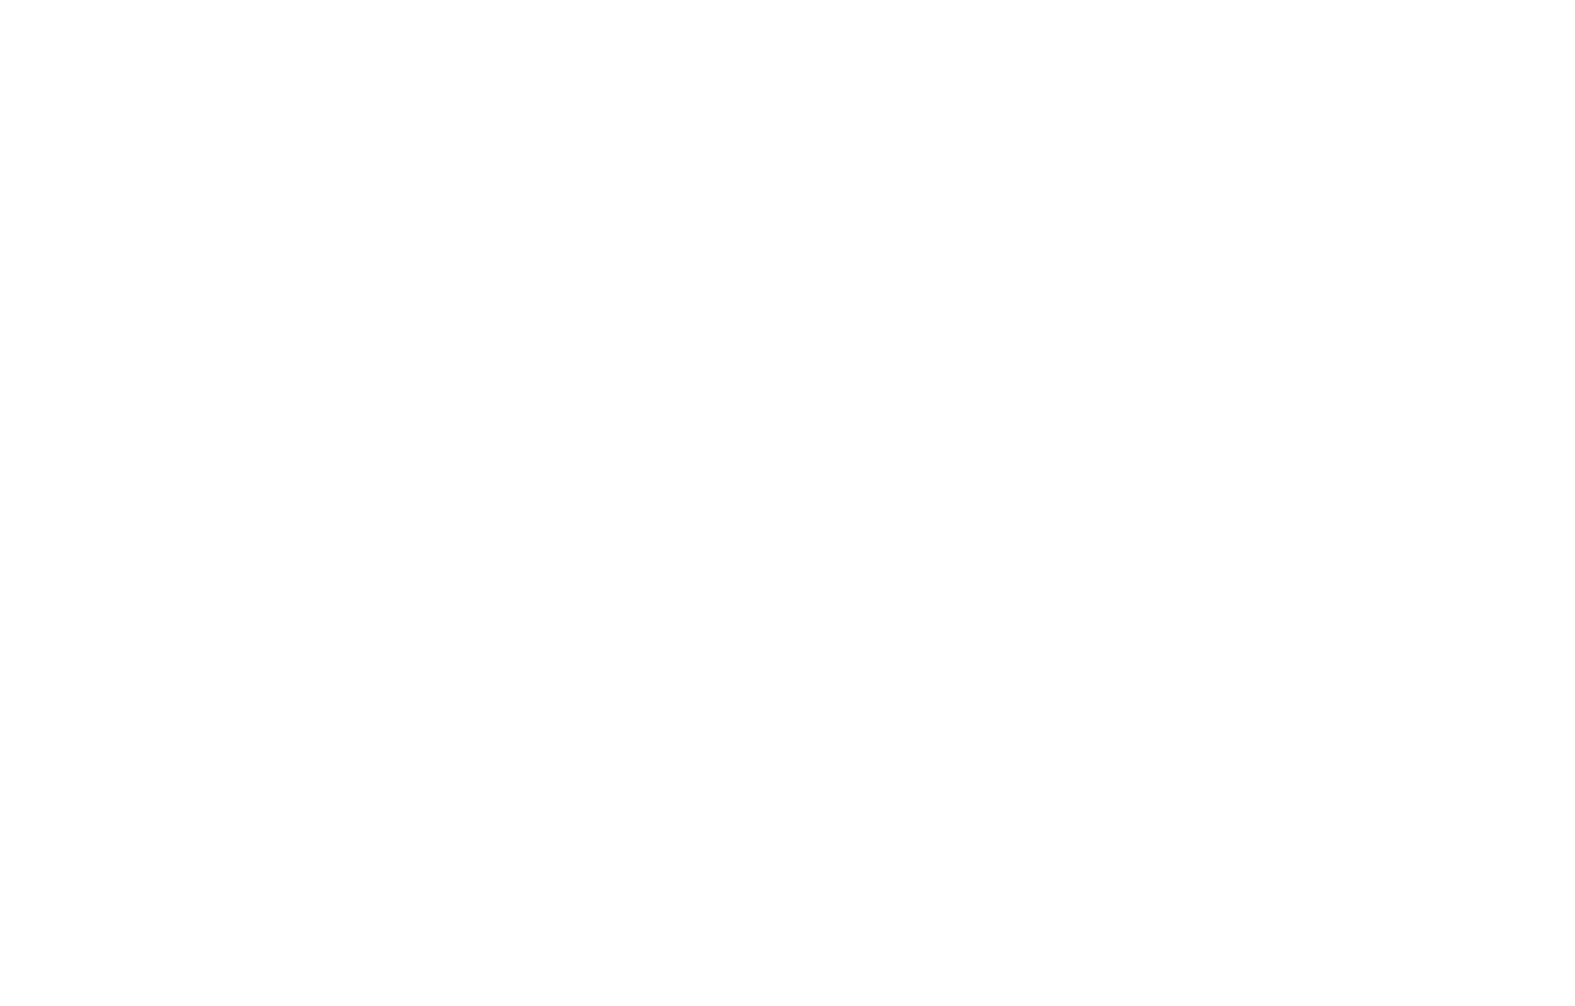 Dubai Refreshment logo large for dark backgrounds (transparent PNG)